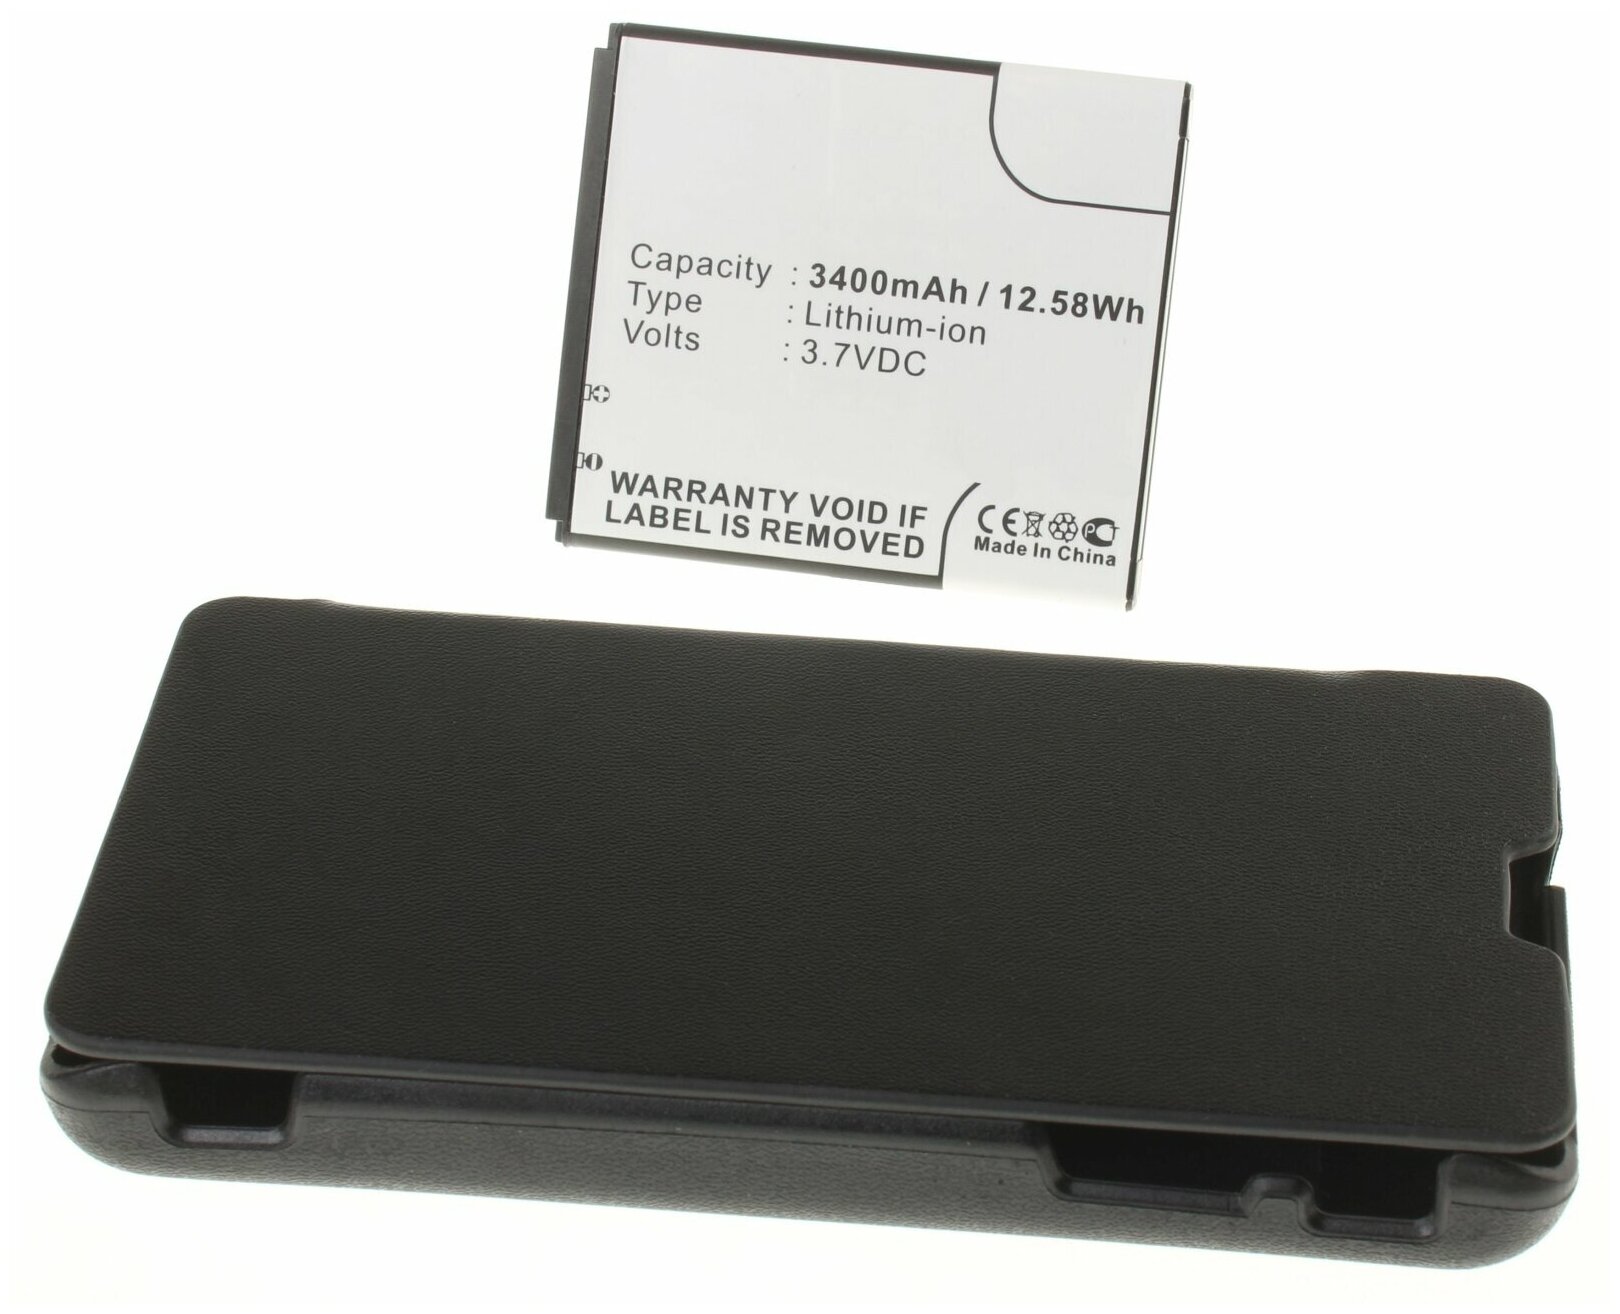 Аккумулятор iBatt iB-U1-M474 3400mAh для Sony Xperia TX (LT29i), для Sony Ericsson Xperia TX LT29, LT29, LT29i, Xperia T LT29i, Xperia TX,